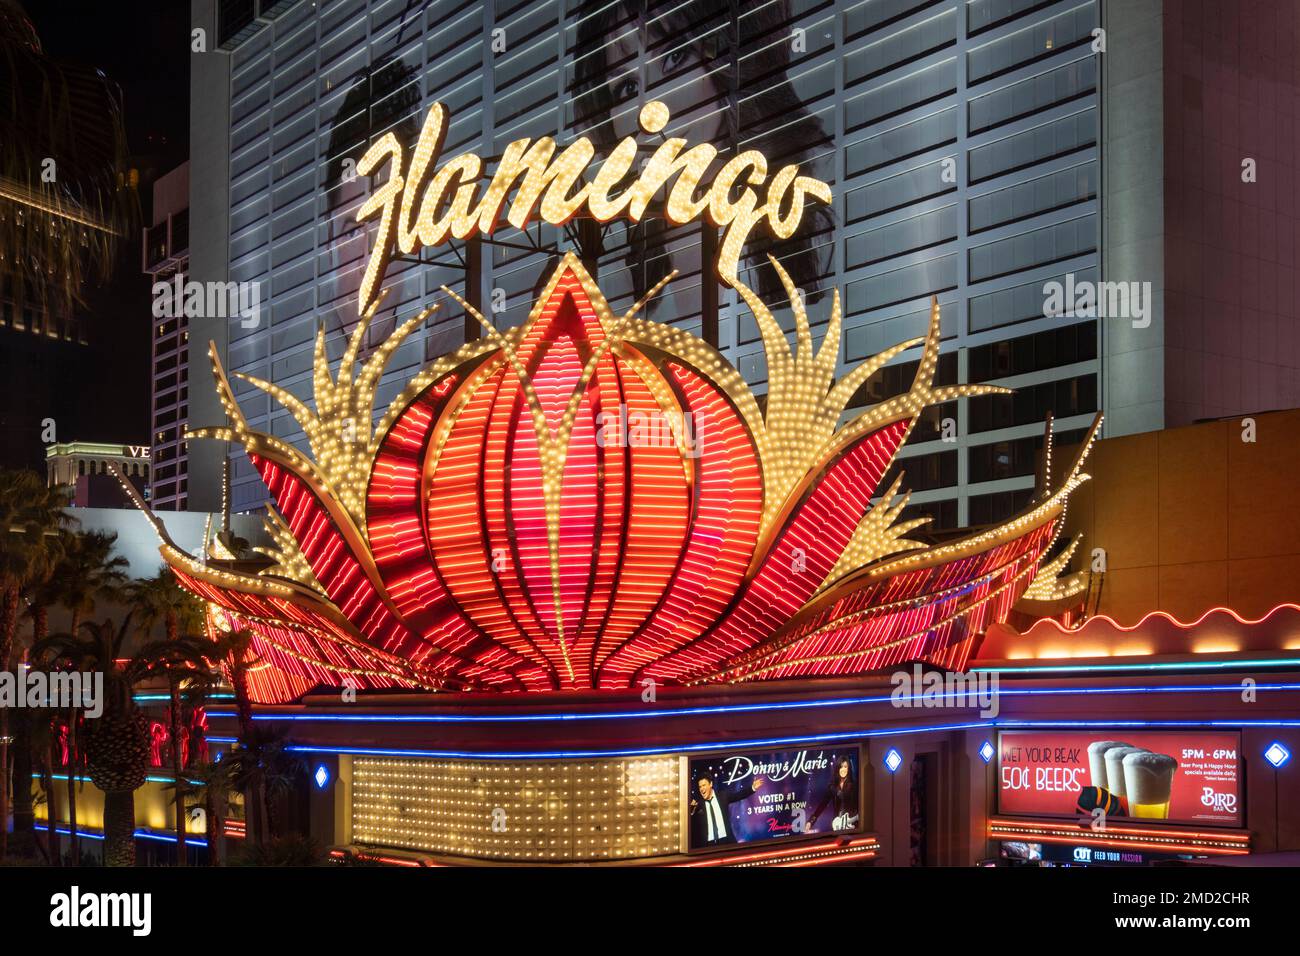 Illuminated Sign on the exterior of the Flamingo Hotel at night, Las Vegas, Nevada, USA Stock Photo